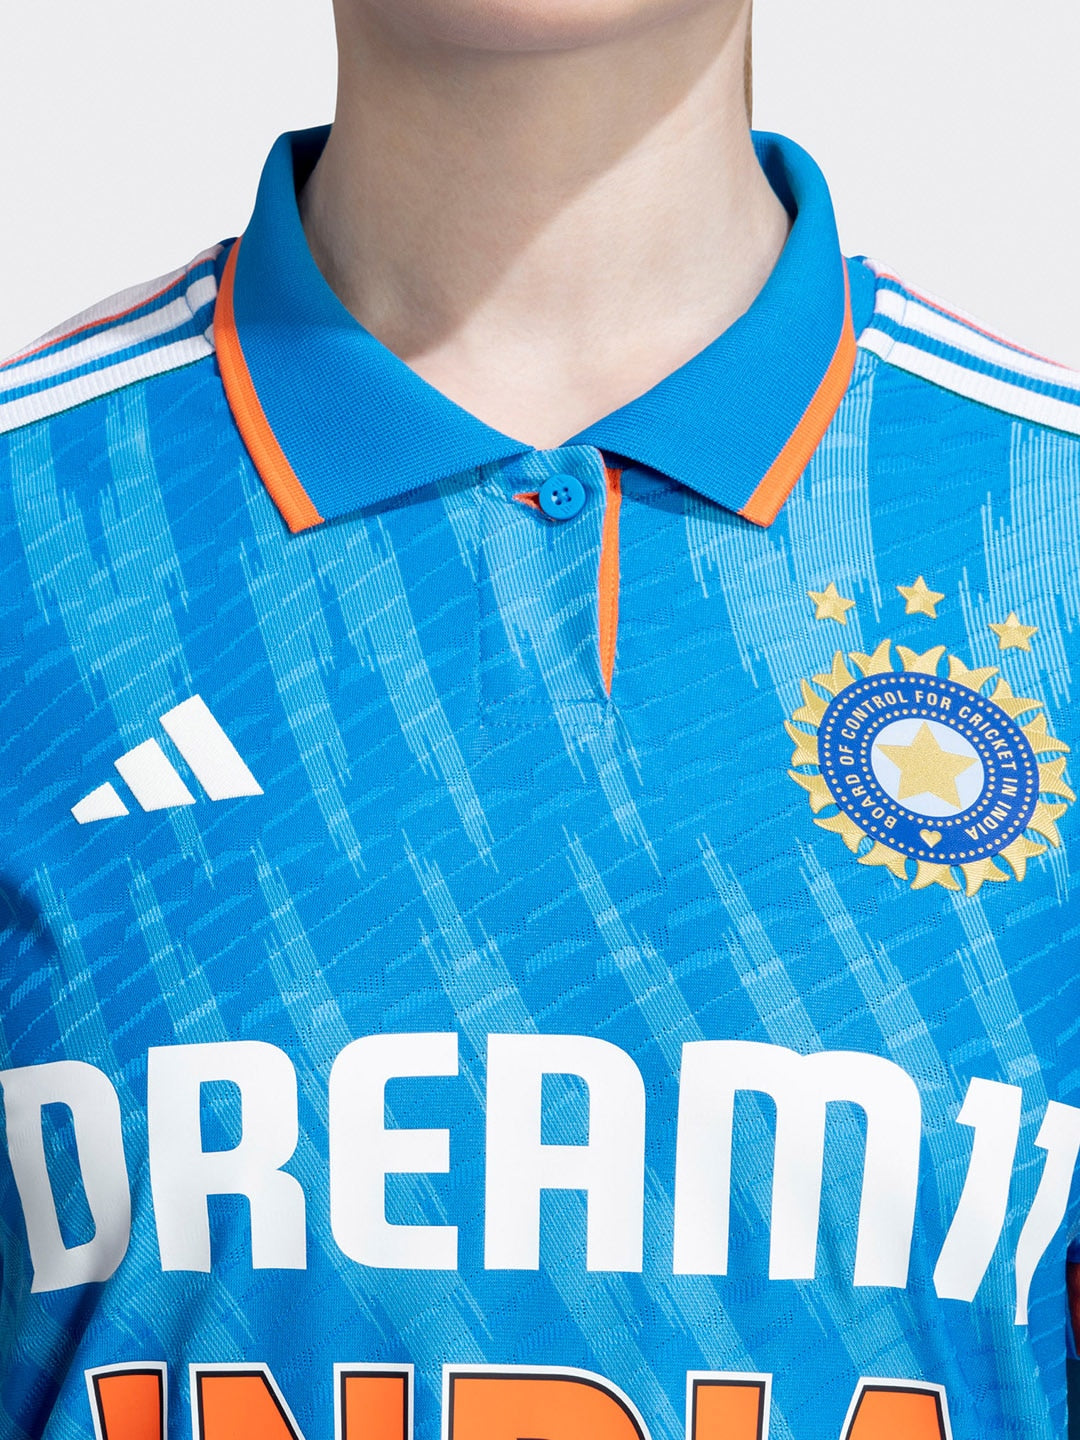 Adidas Typography Printed One Day International Cricket Jersey T-shirt - Distacart